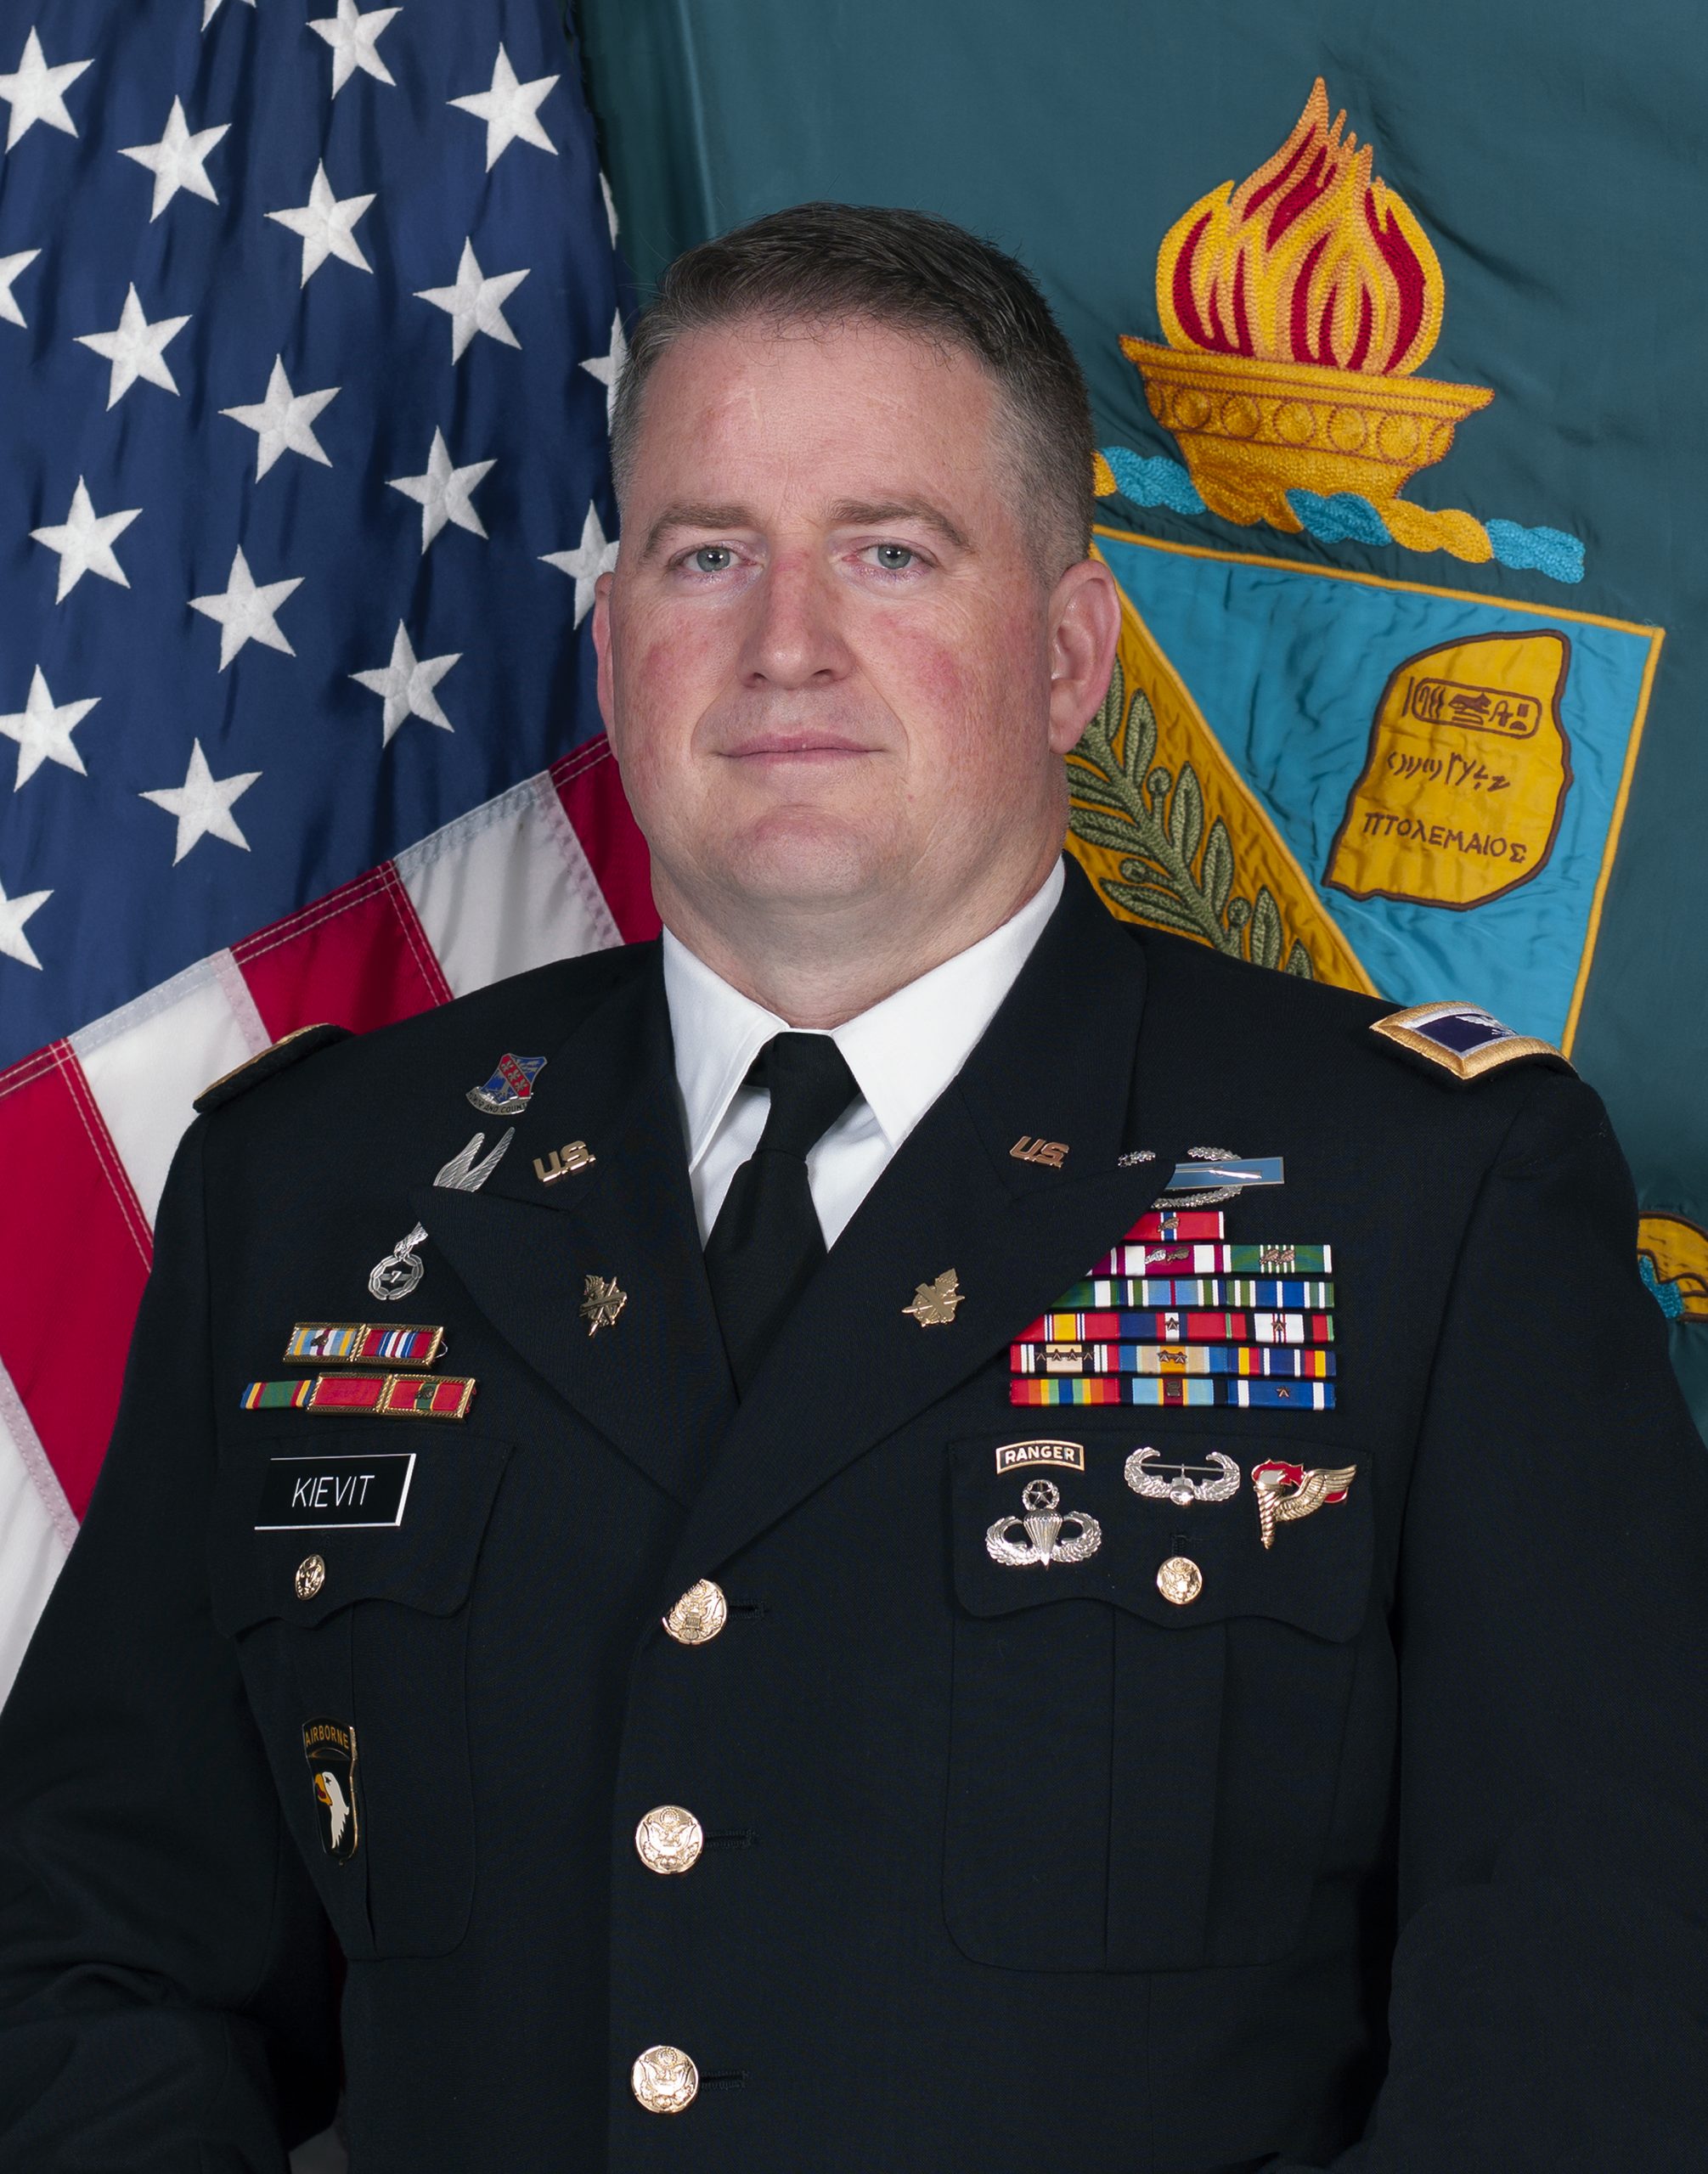 Col. James Kievit, Commandant DLIFLC